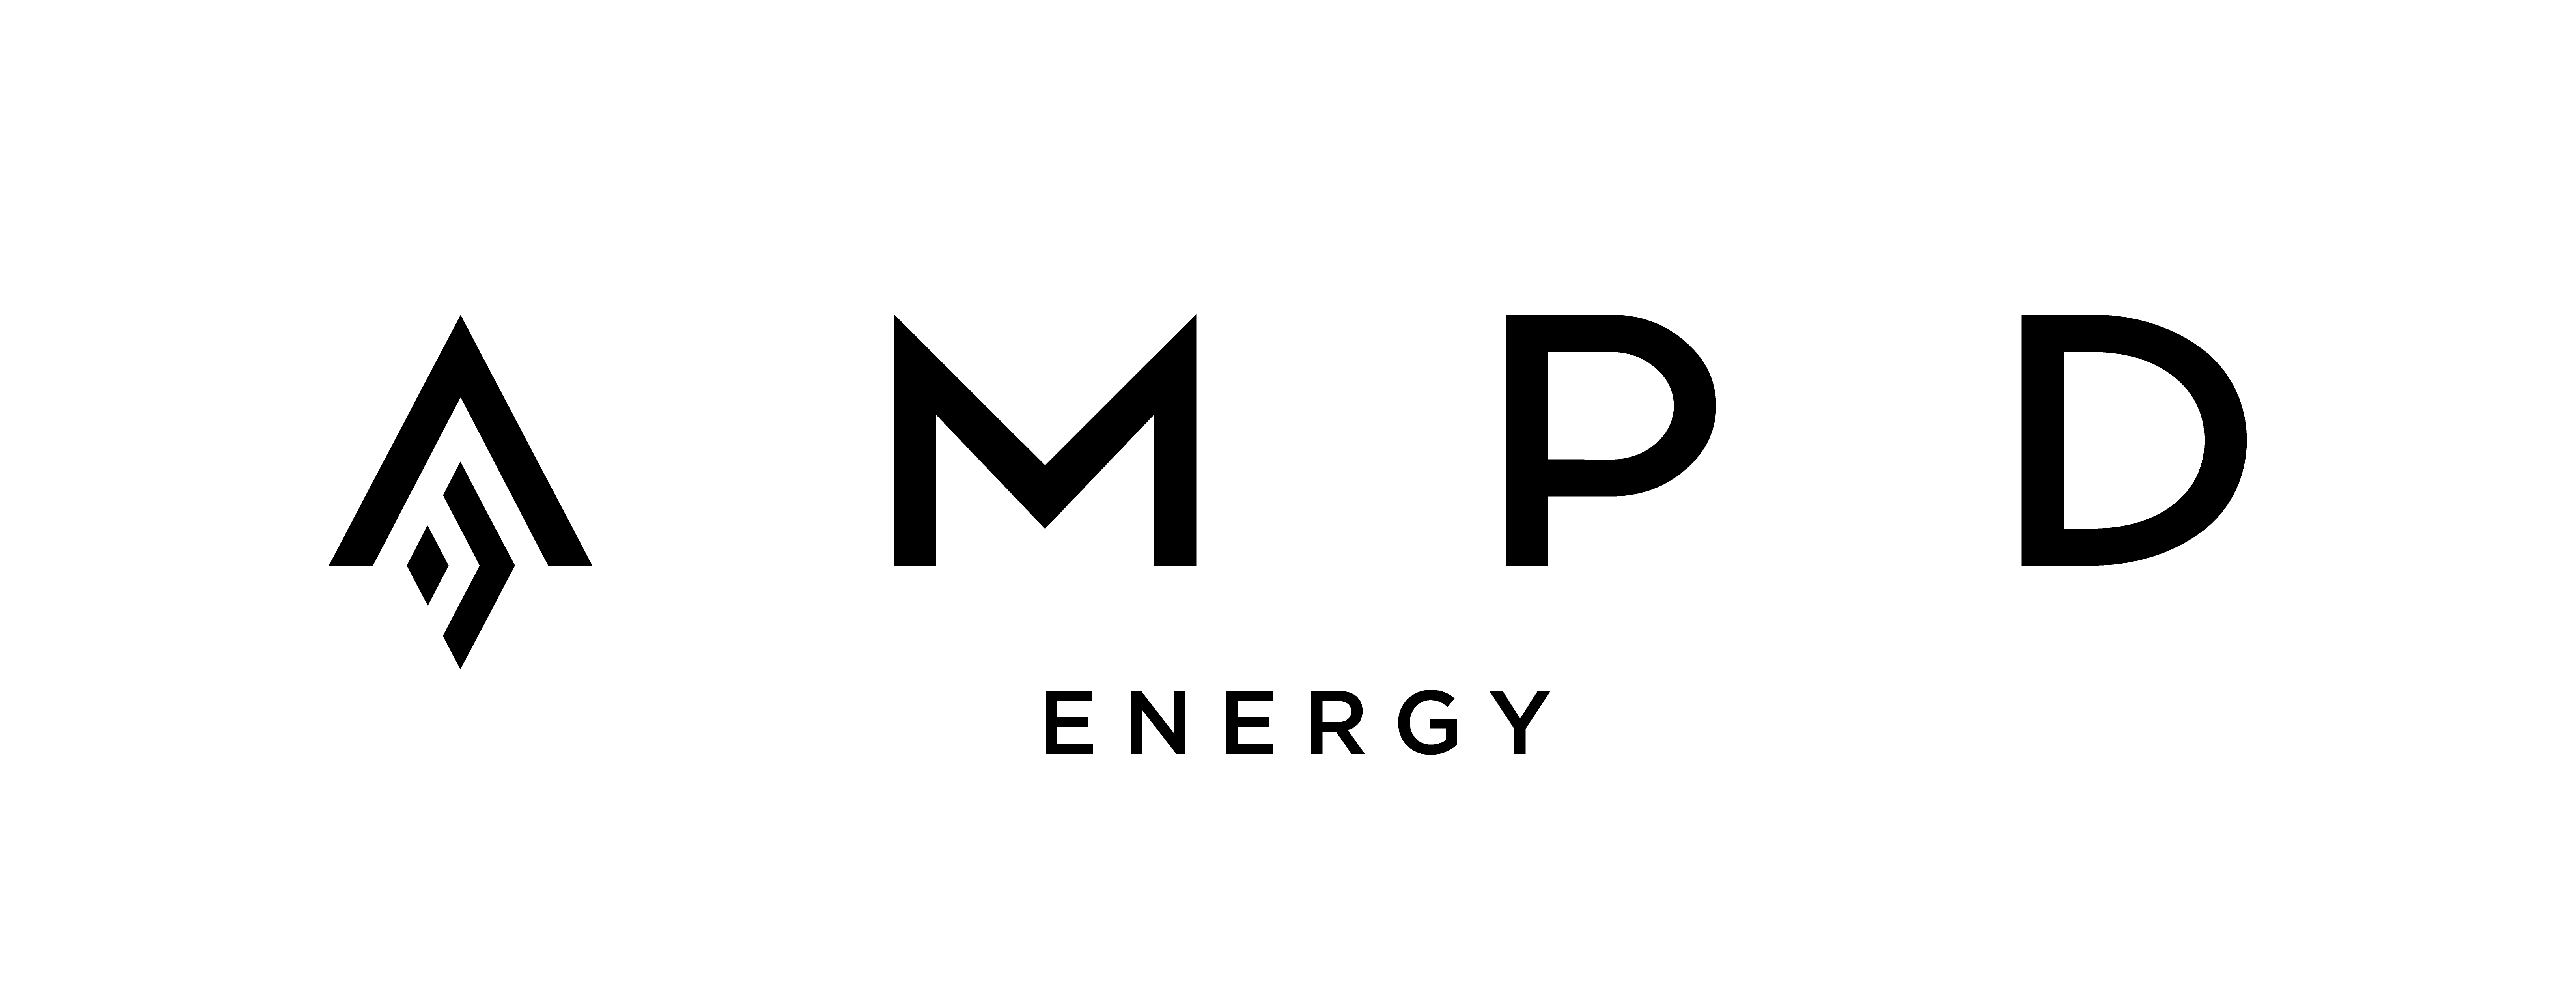 AMPD Logo - Black